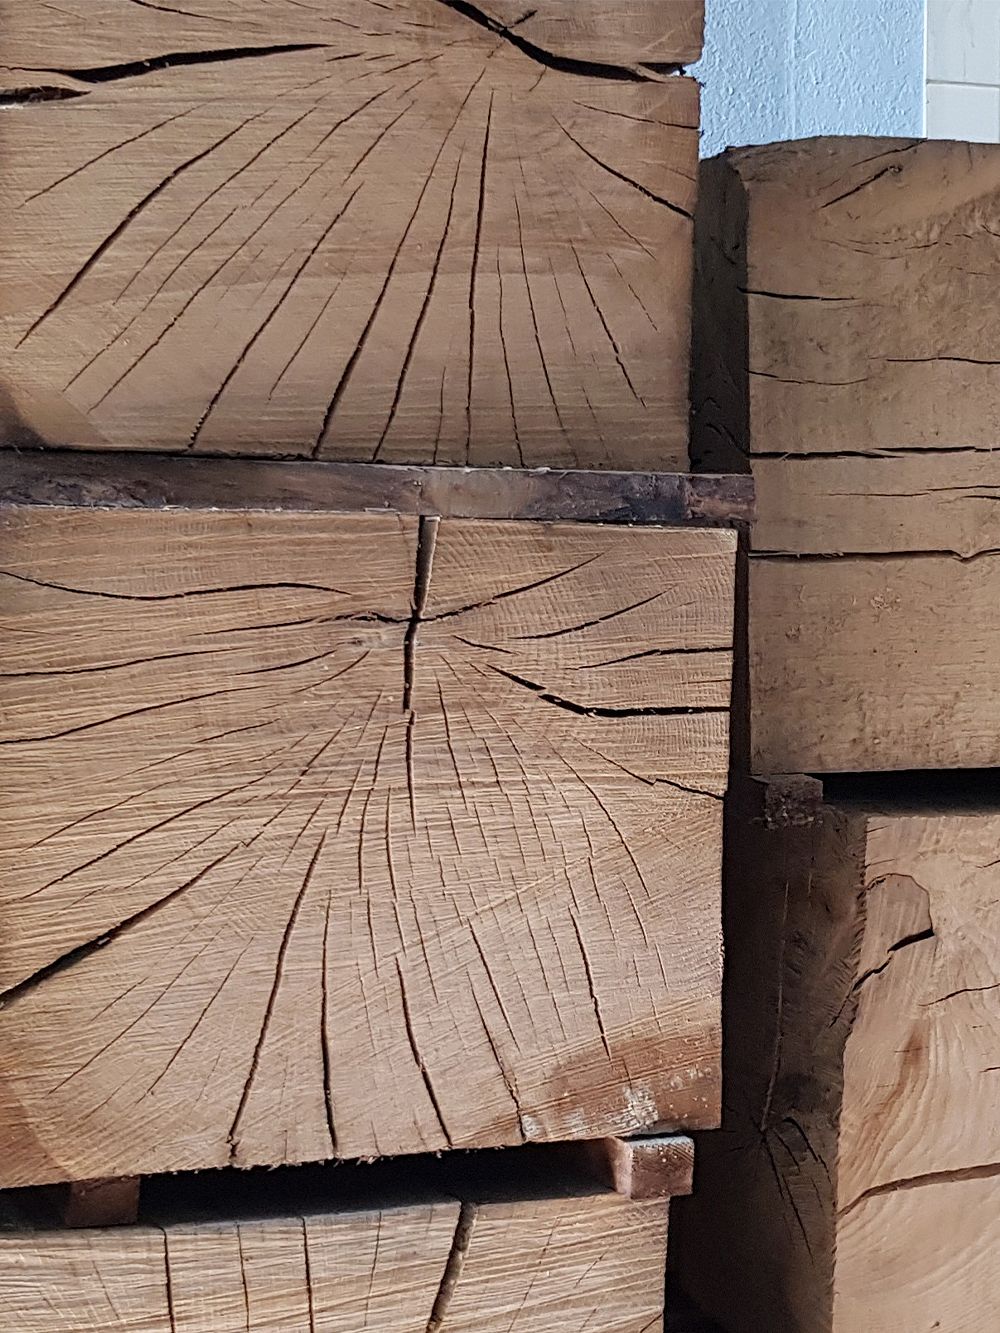 Pile of wood logs that will become Nikari Biennale stools